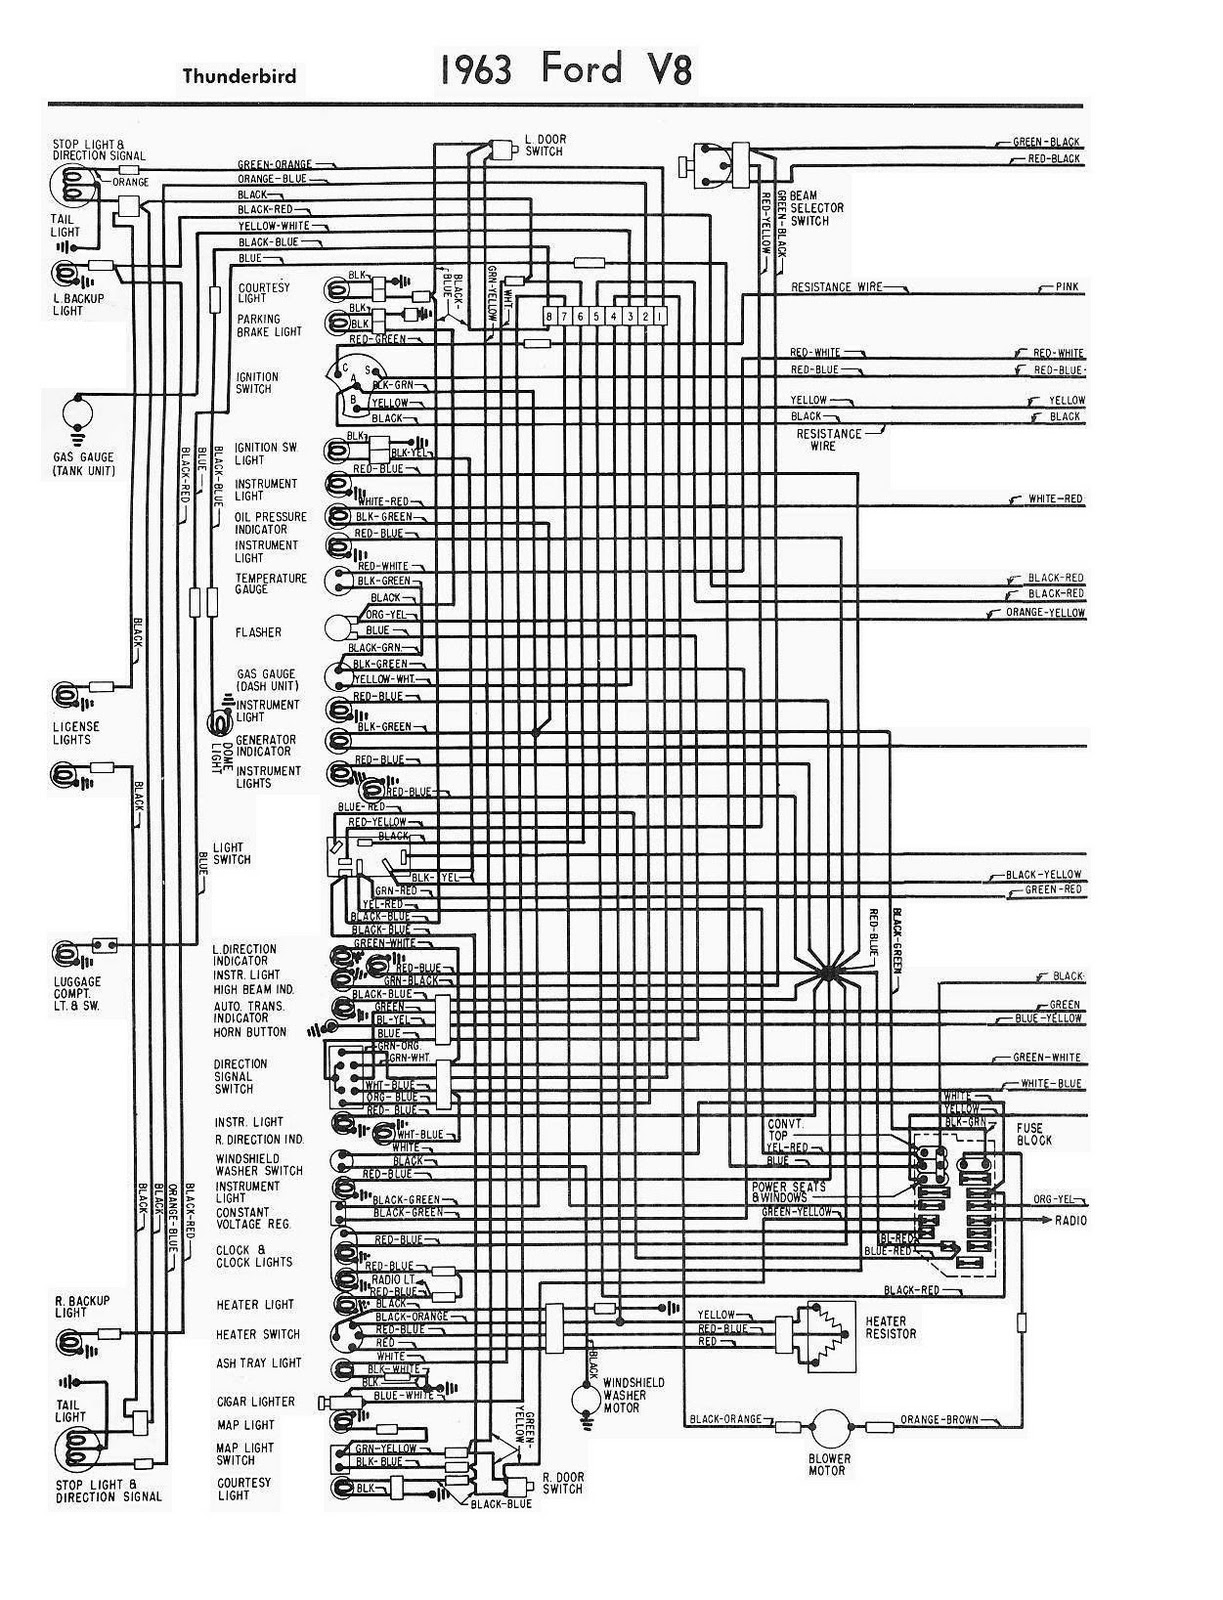 1963 Ford thunderbird wiring diagram